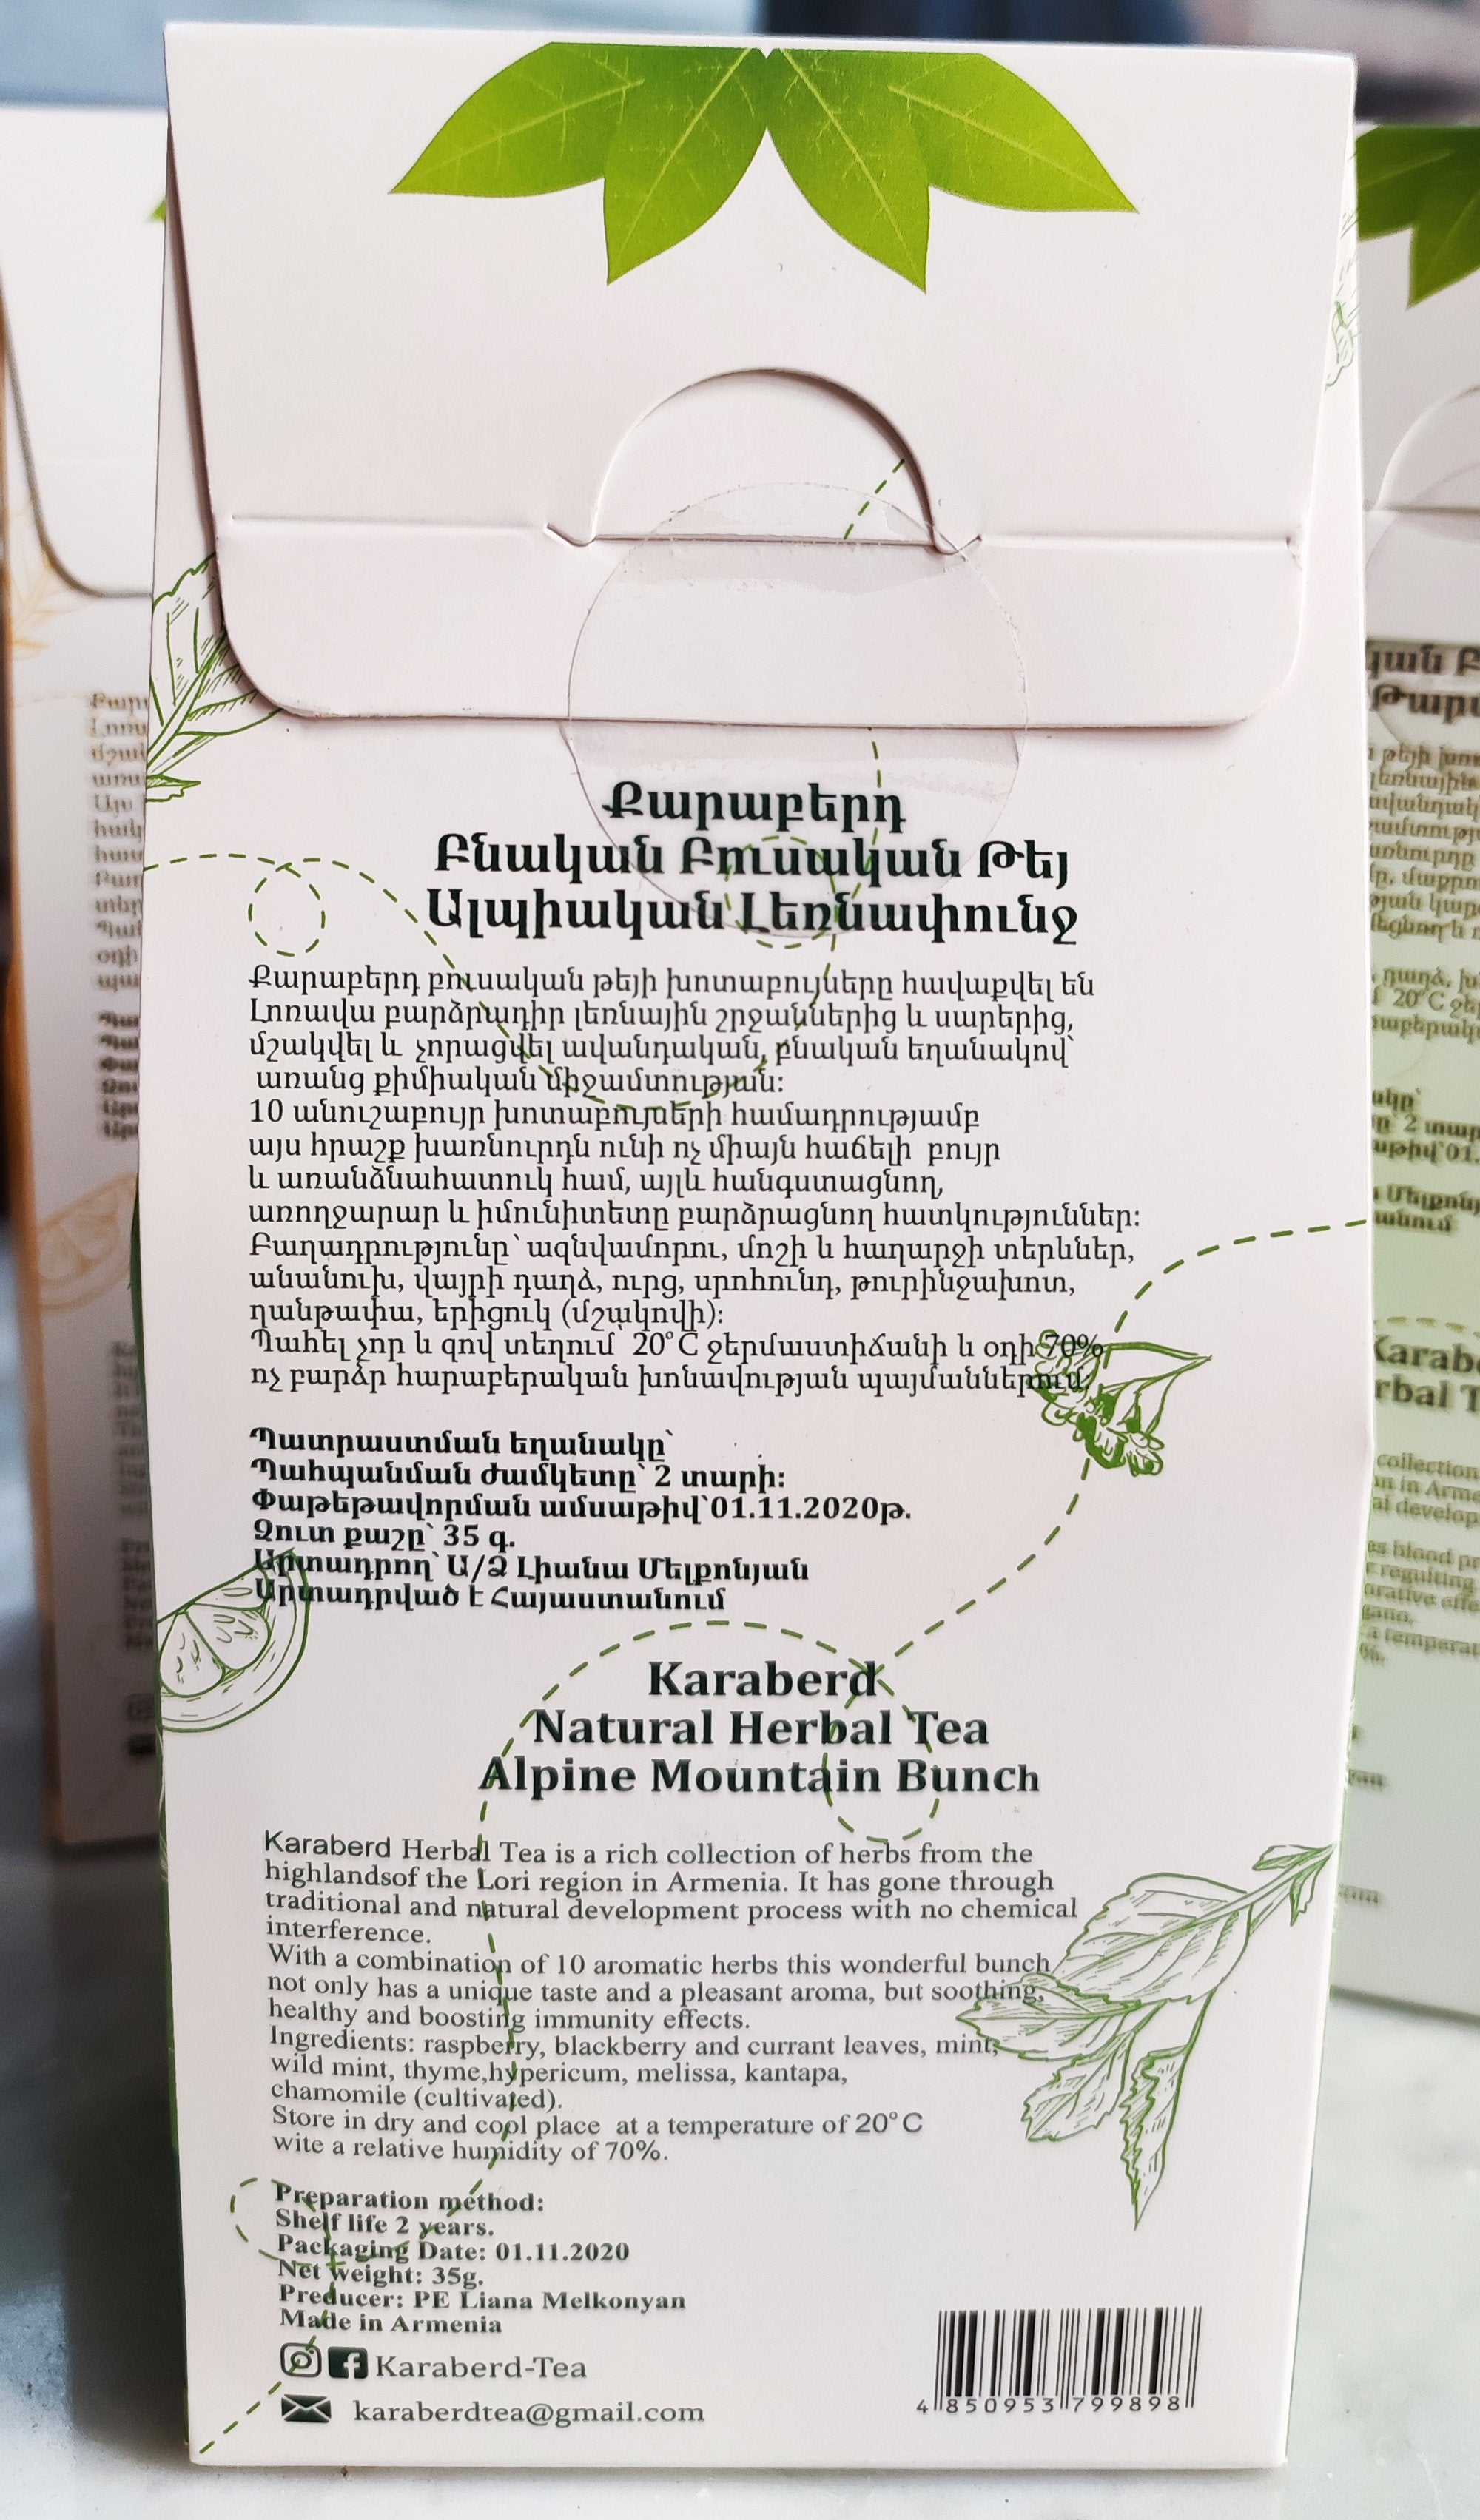 Karaberd Herbal Tea - Alpine Mountain Bunch